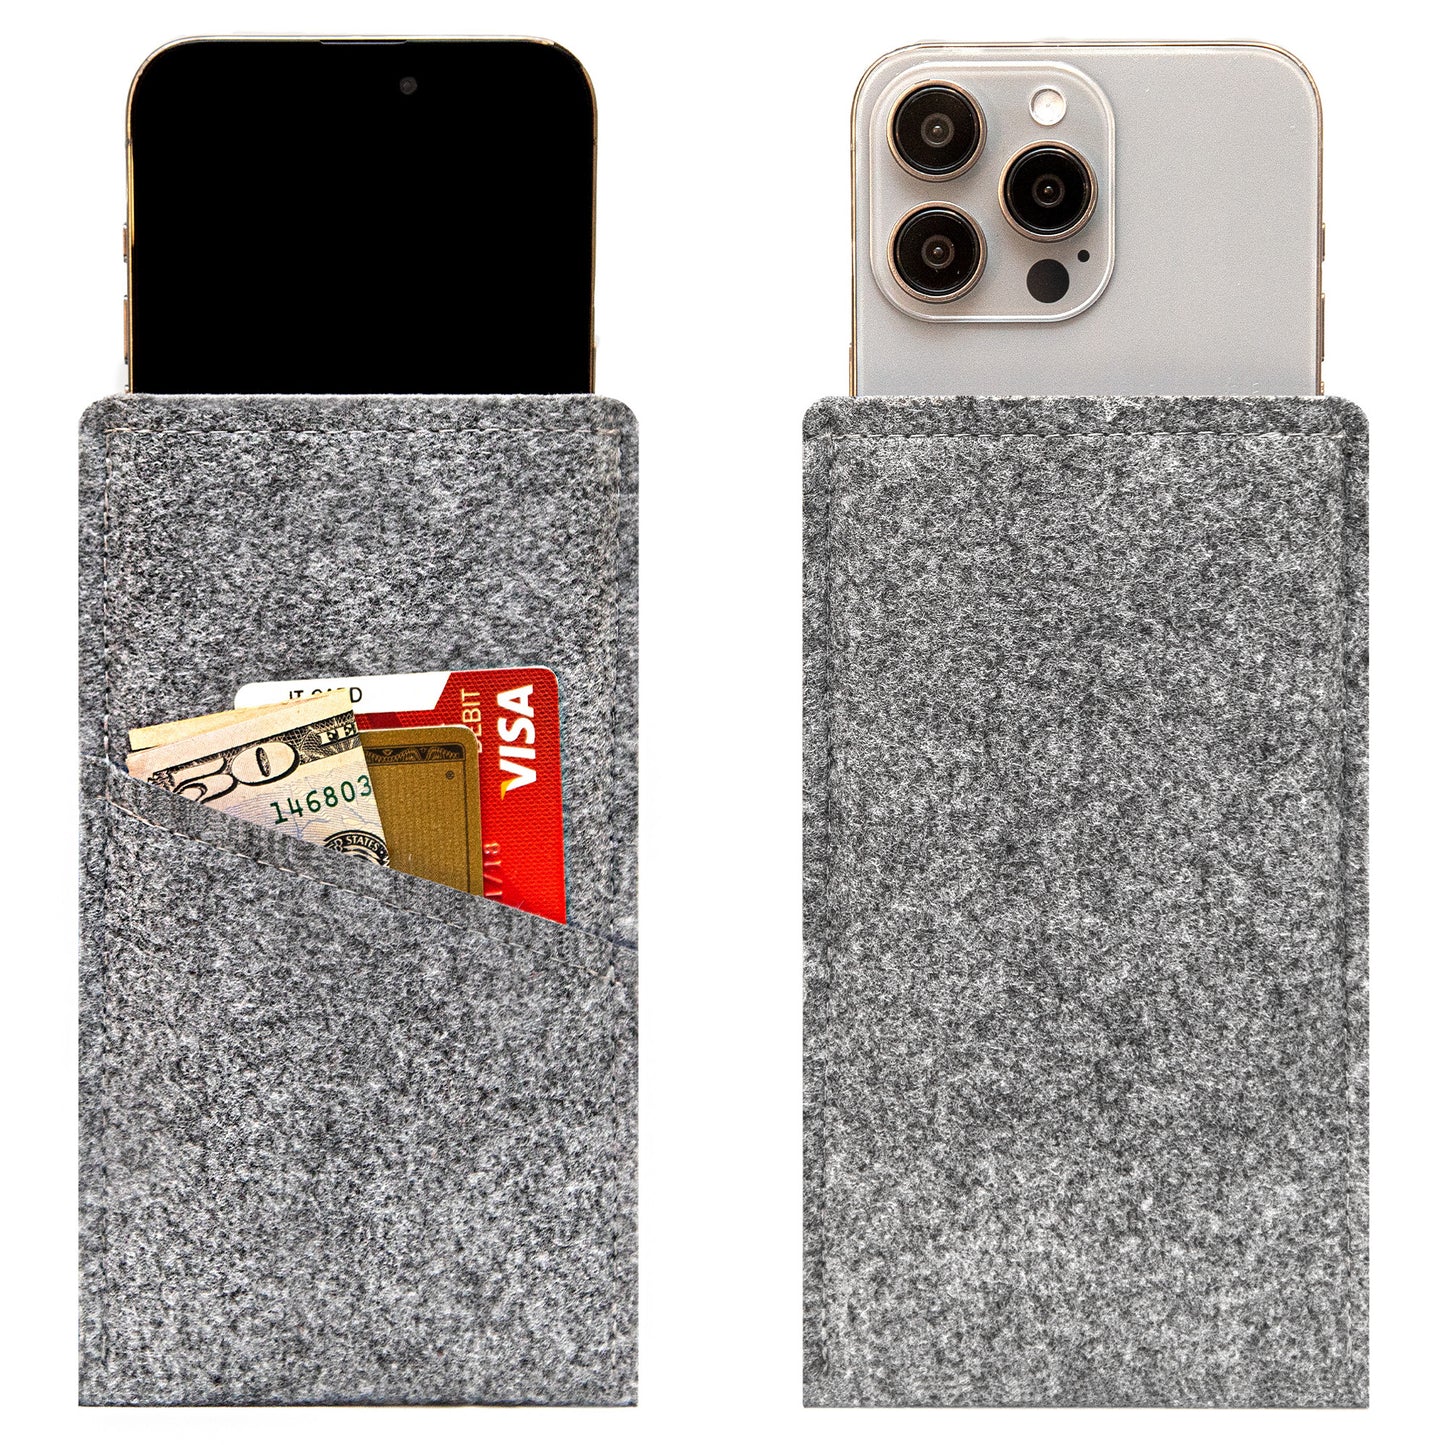 Premium Felt iPhone Sleeve with Card Pocket - Grey & Mustard